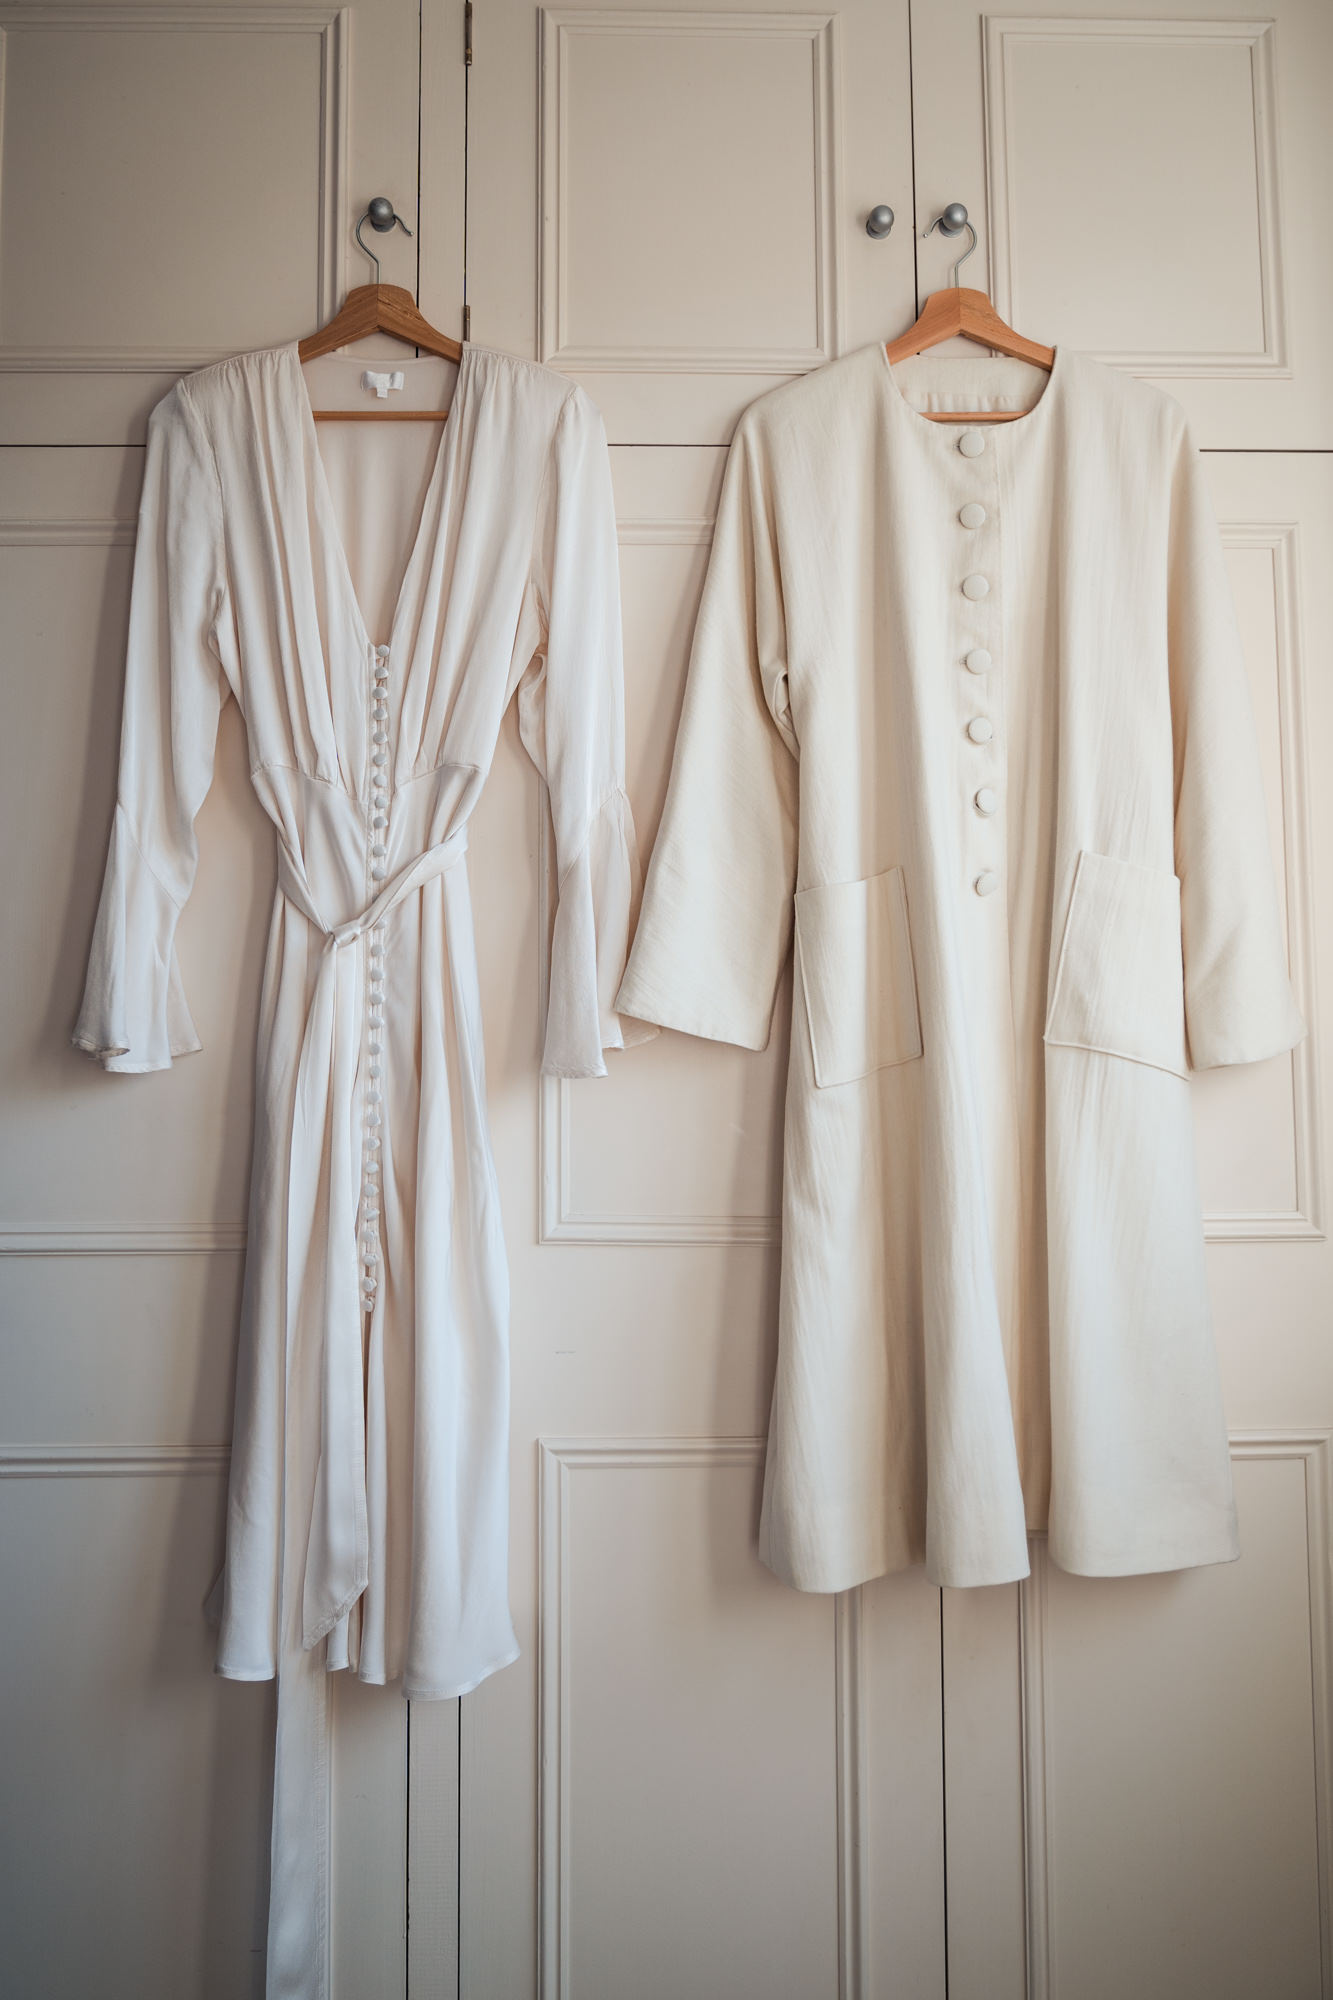 brides Ghost wedding dress hangs next to a cream bespoke jacket on a wardrobe